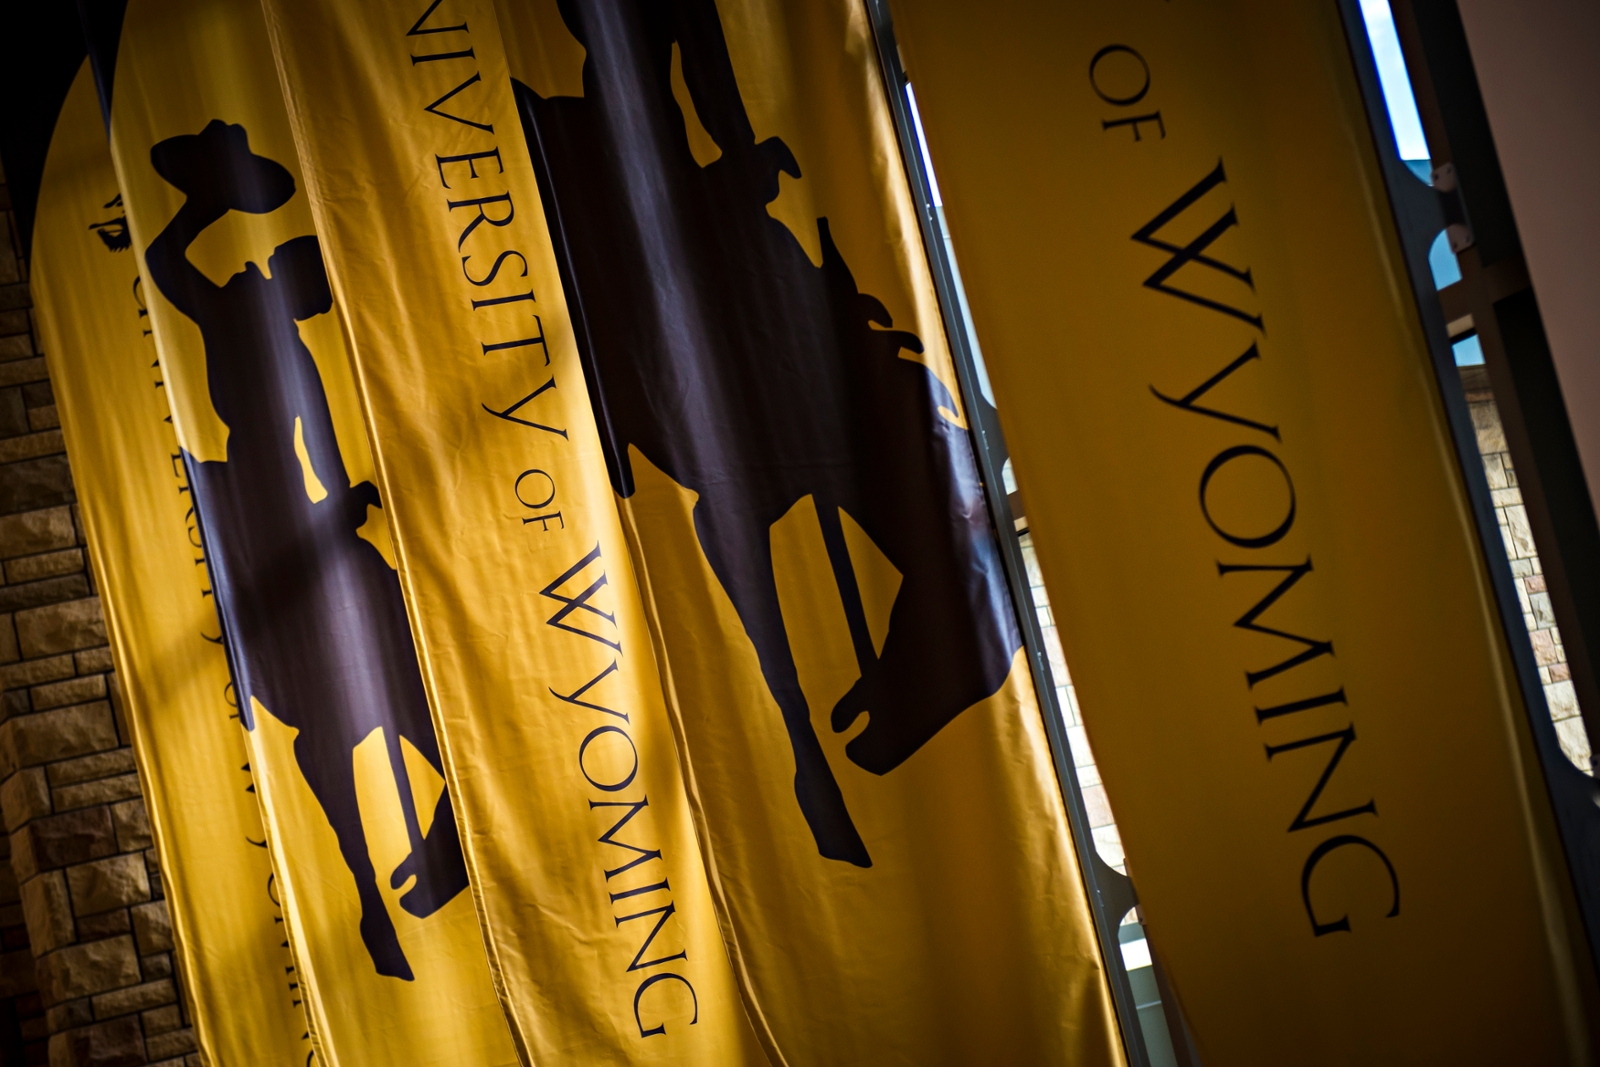 University of Wyoming Flags